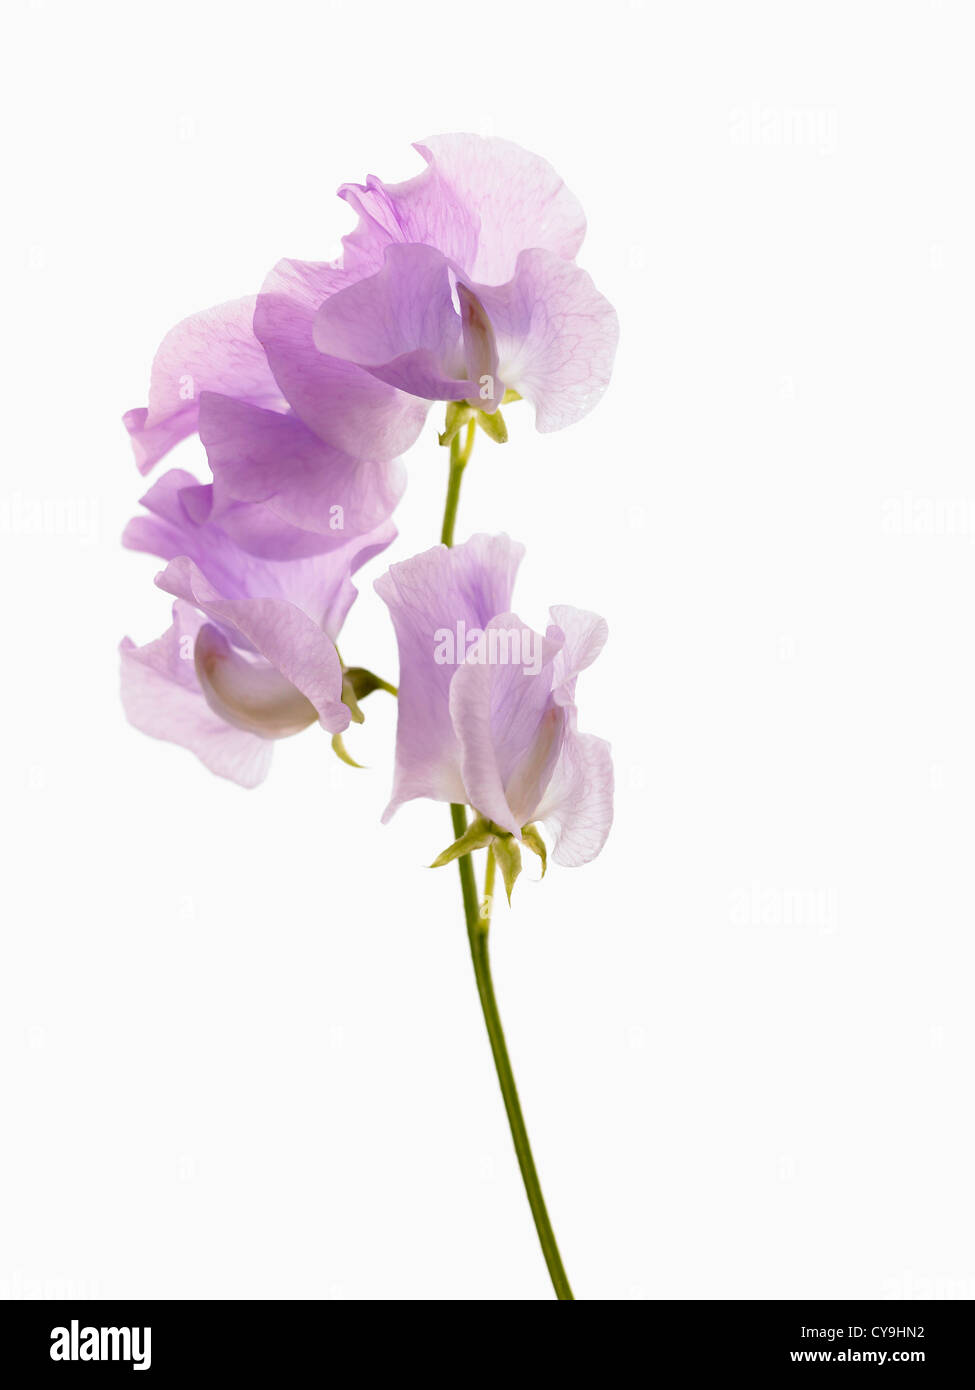 Lathyrus odoratus, Sweet pea. Stem with light purple flowers against a white background Stock Photo